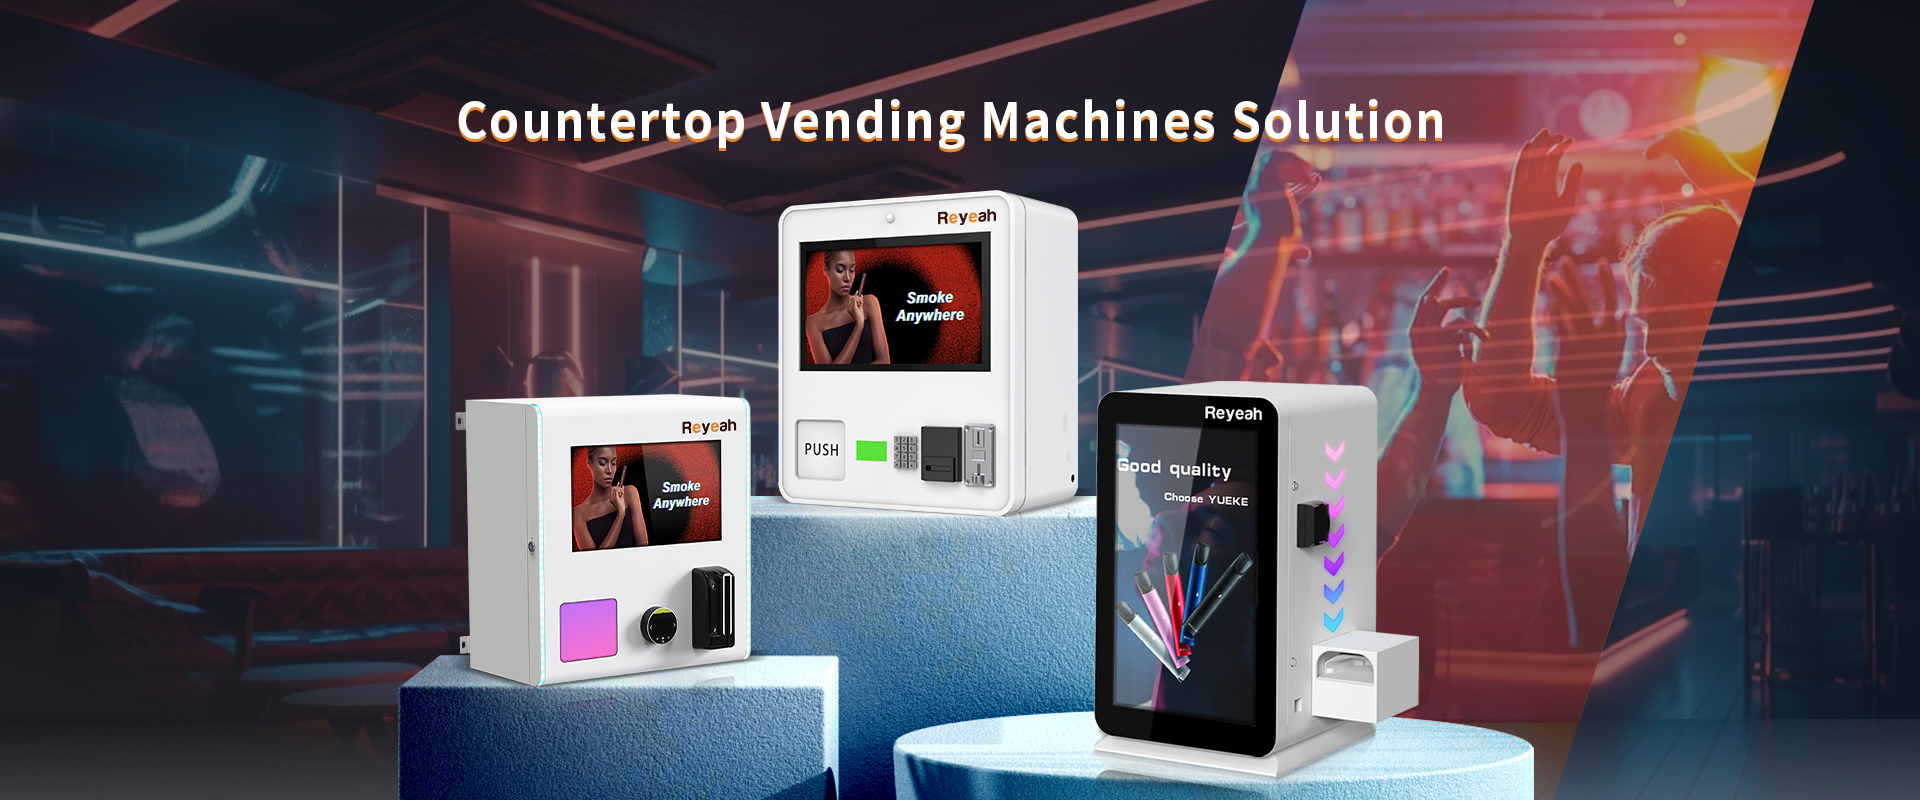 Countertop Vending Machines Solution